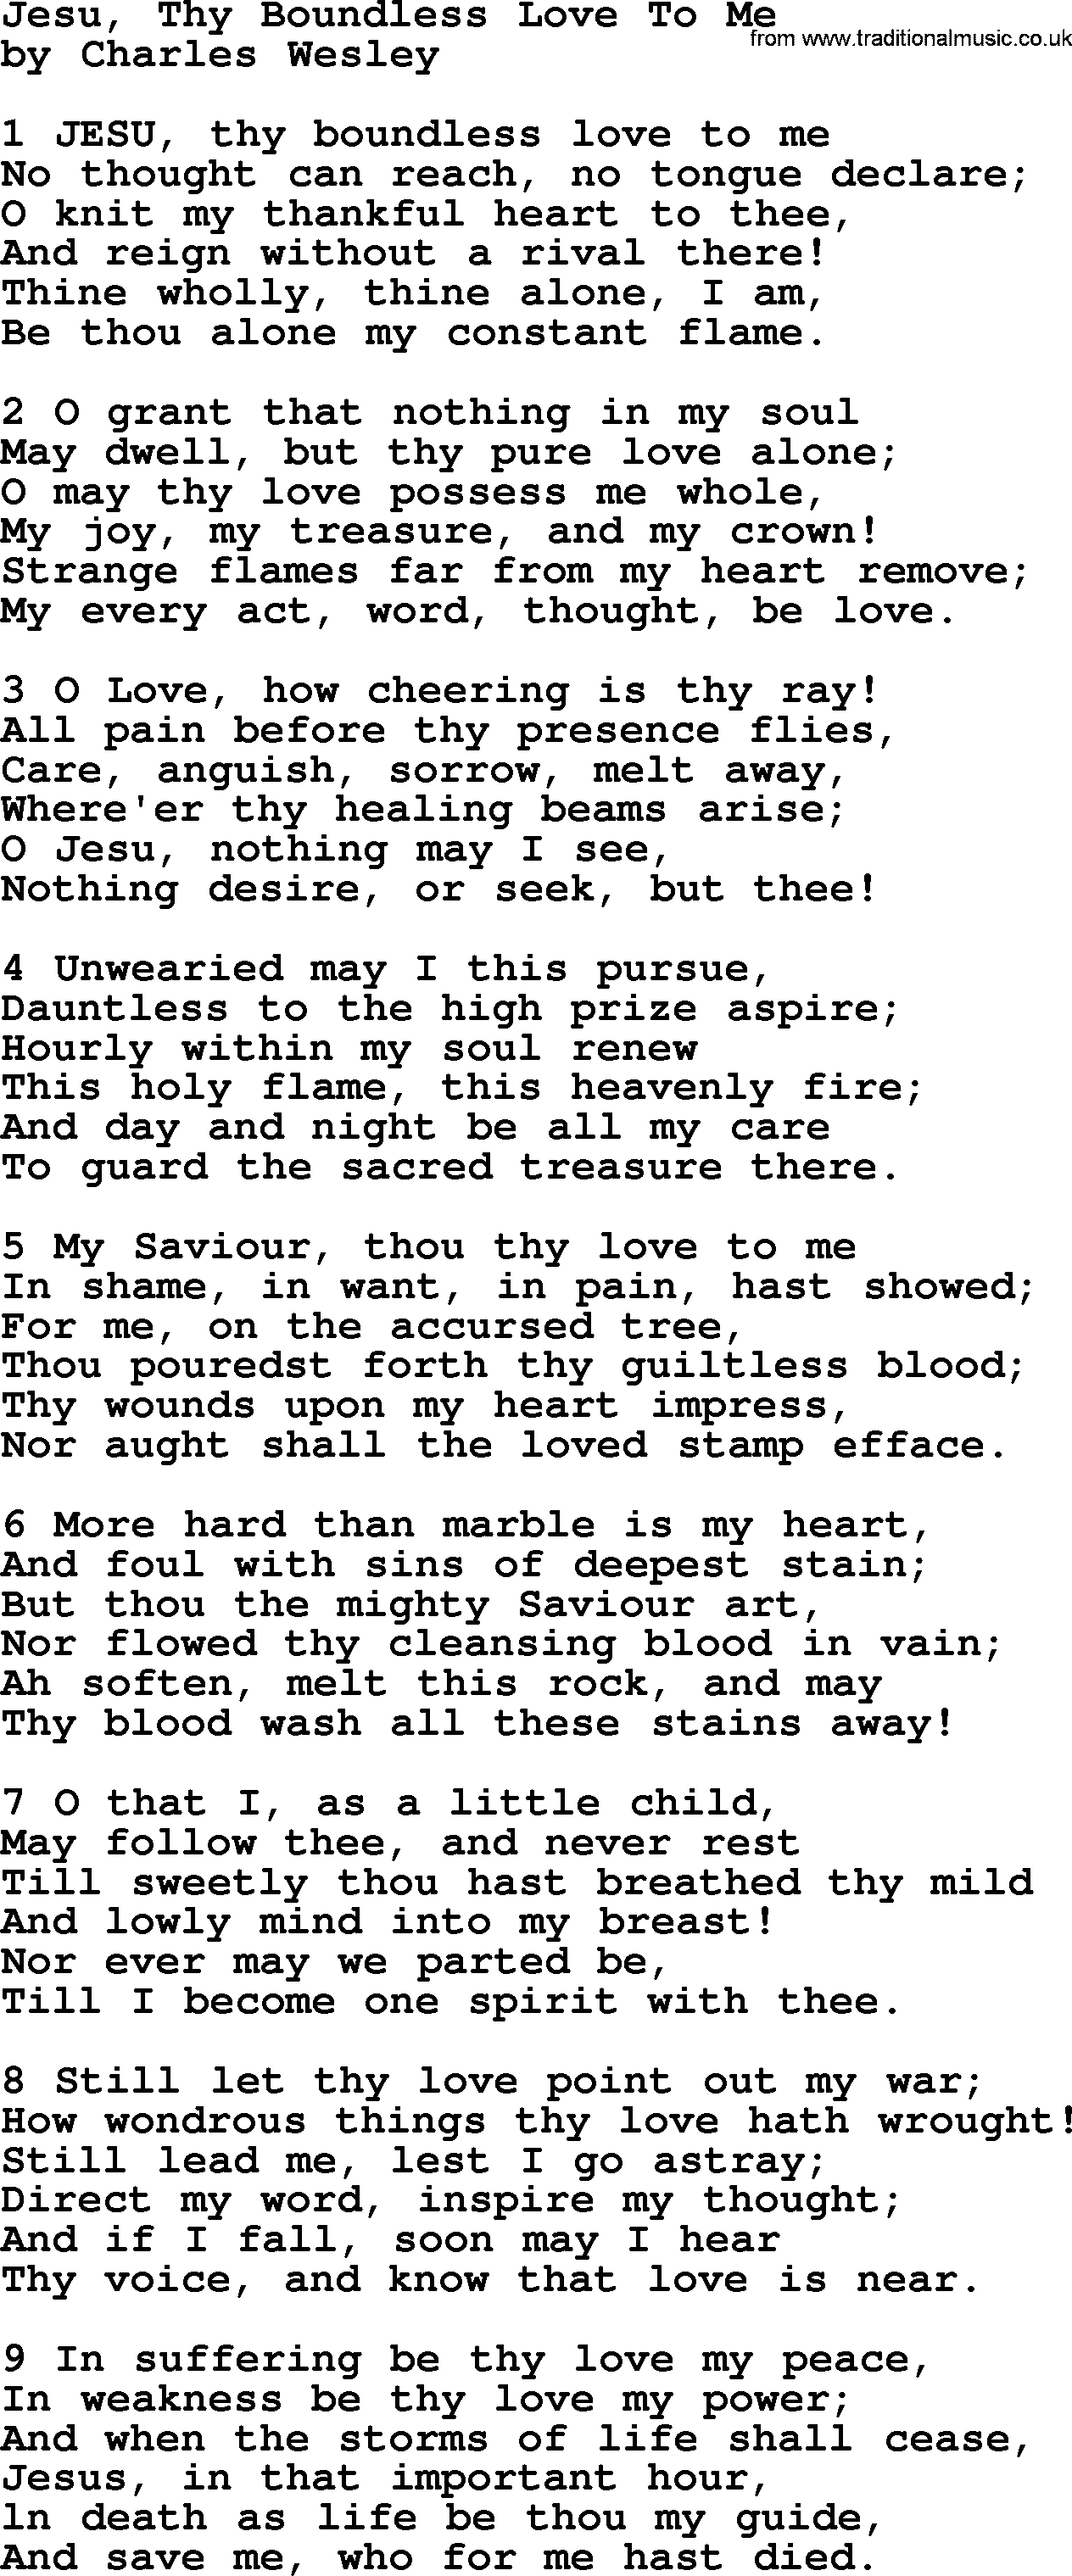 Charles Wesley hymn: Jesu, Thy Boundless Love To Me, lyrics